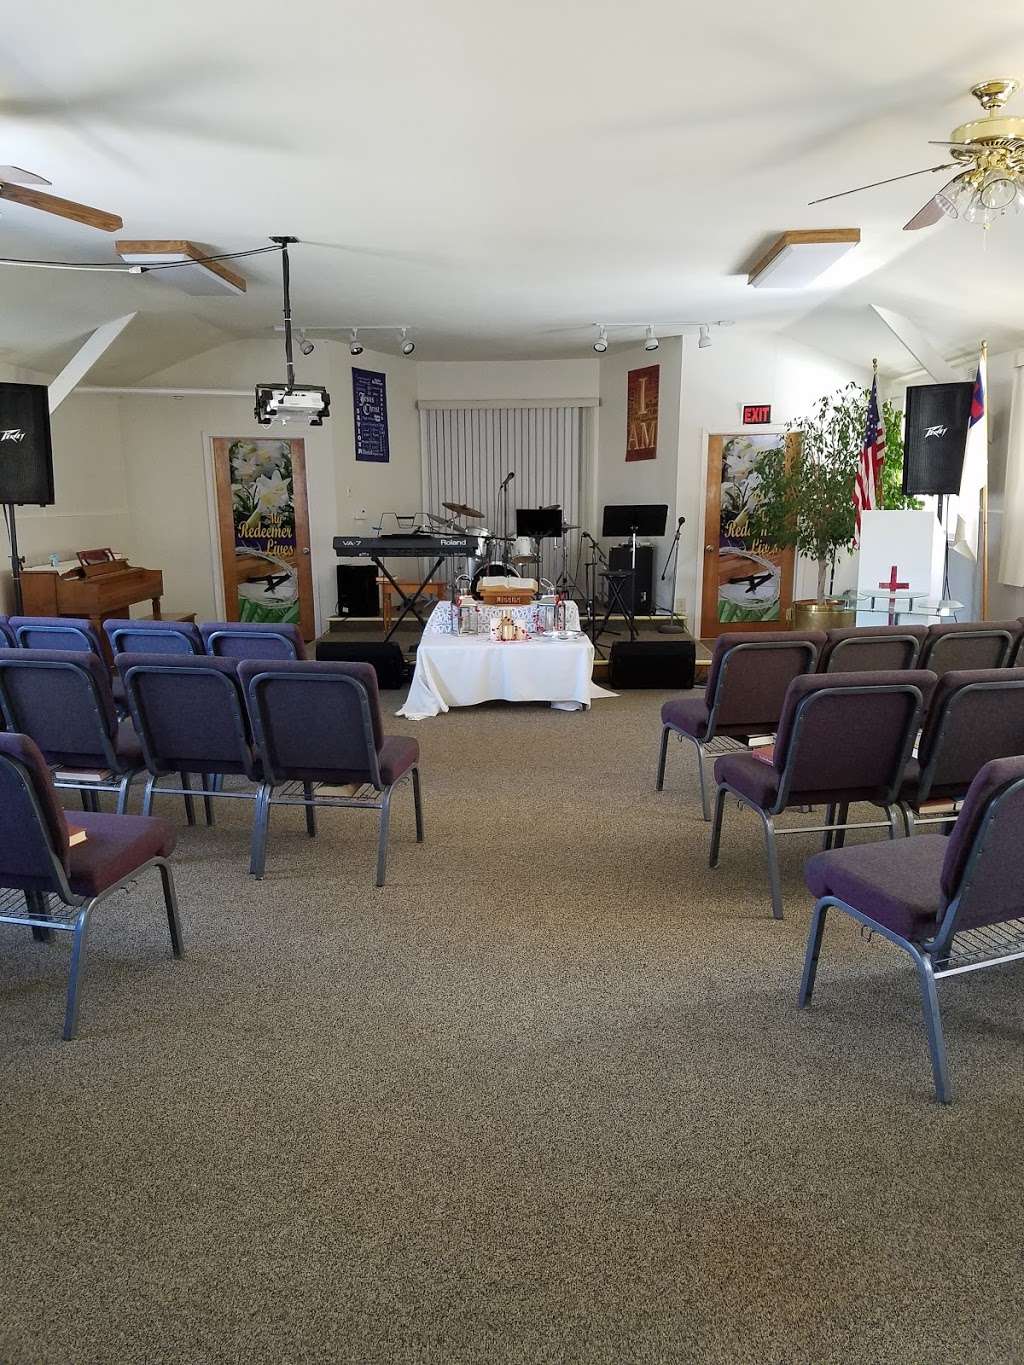 New Hope Fellowship Erie Baptist Church | 580 Cheesman St, Erie, CO 80516 | Phone: (303) 828-0638